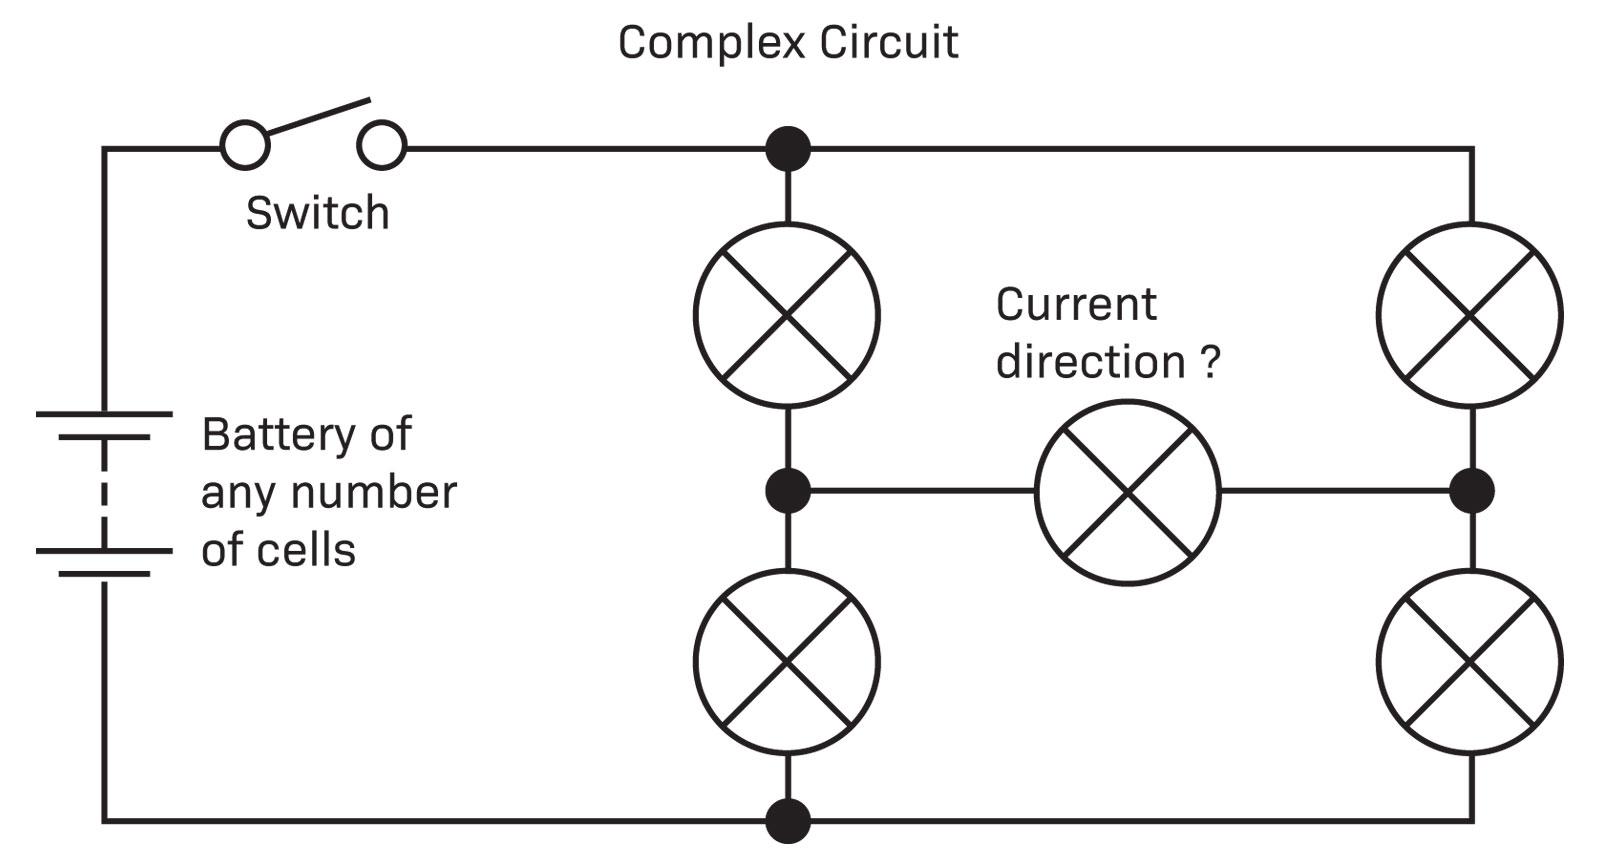 Complex circuit